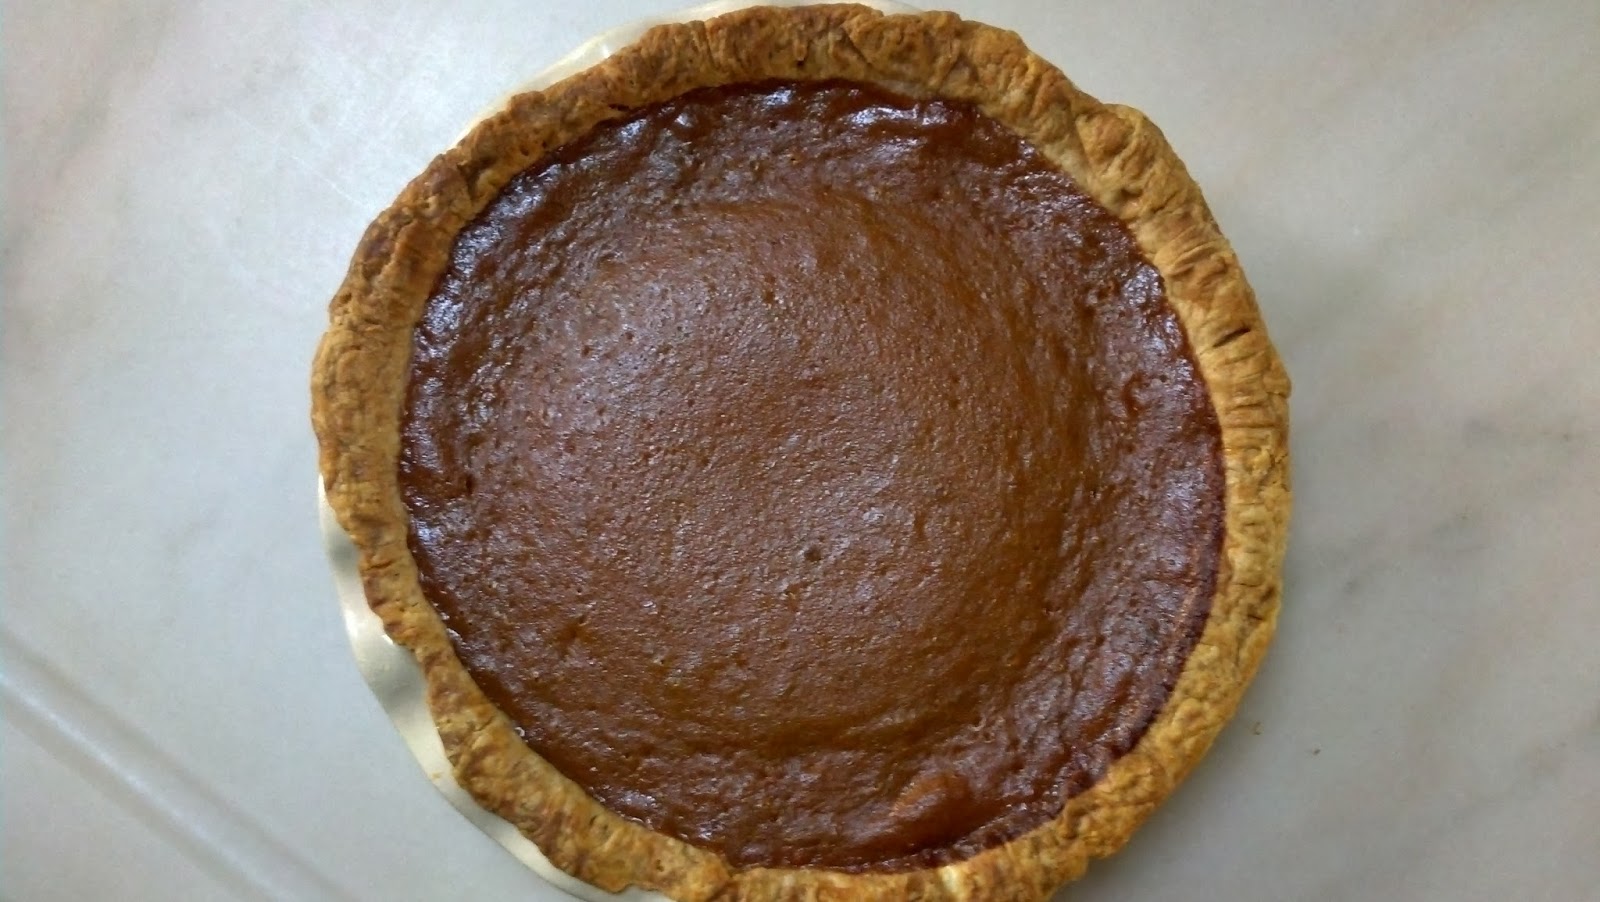 A pumpkin pie sits on a tiled surface.